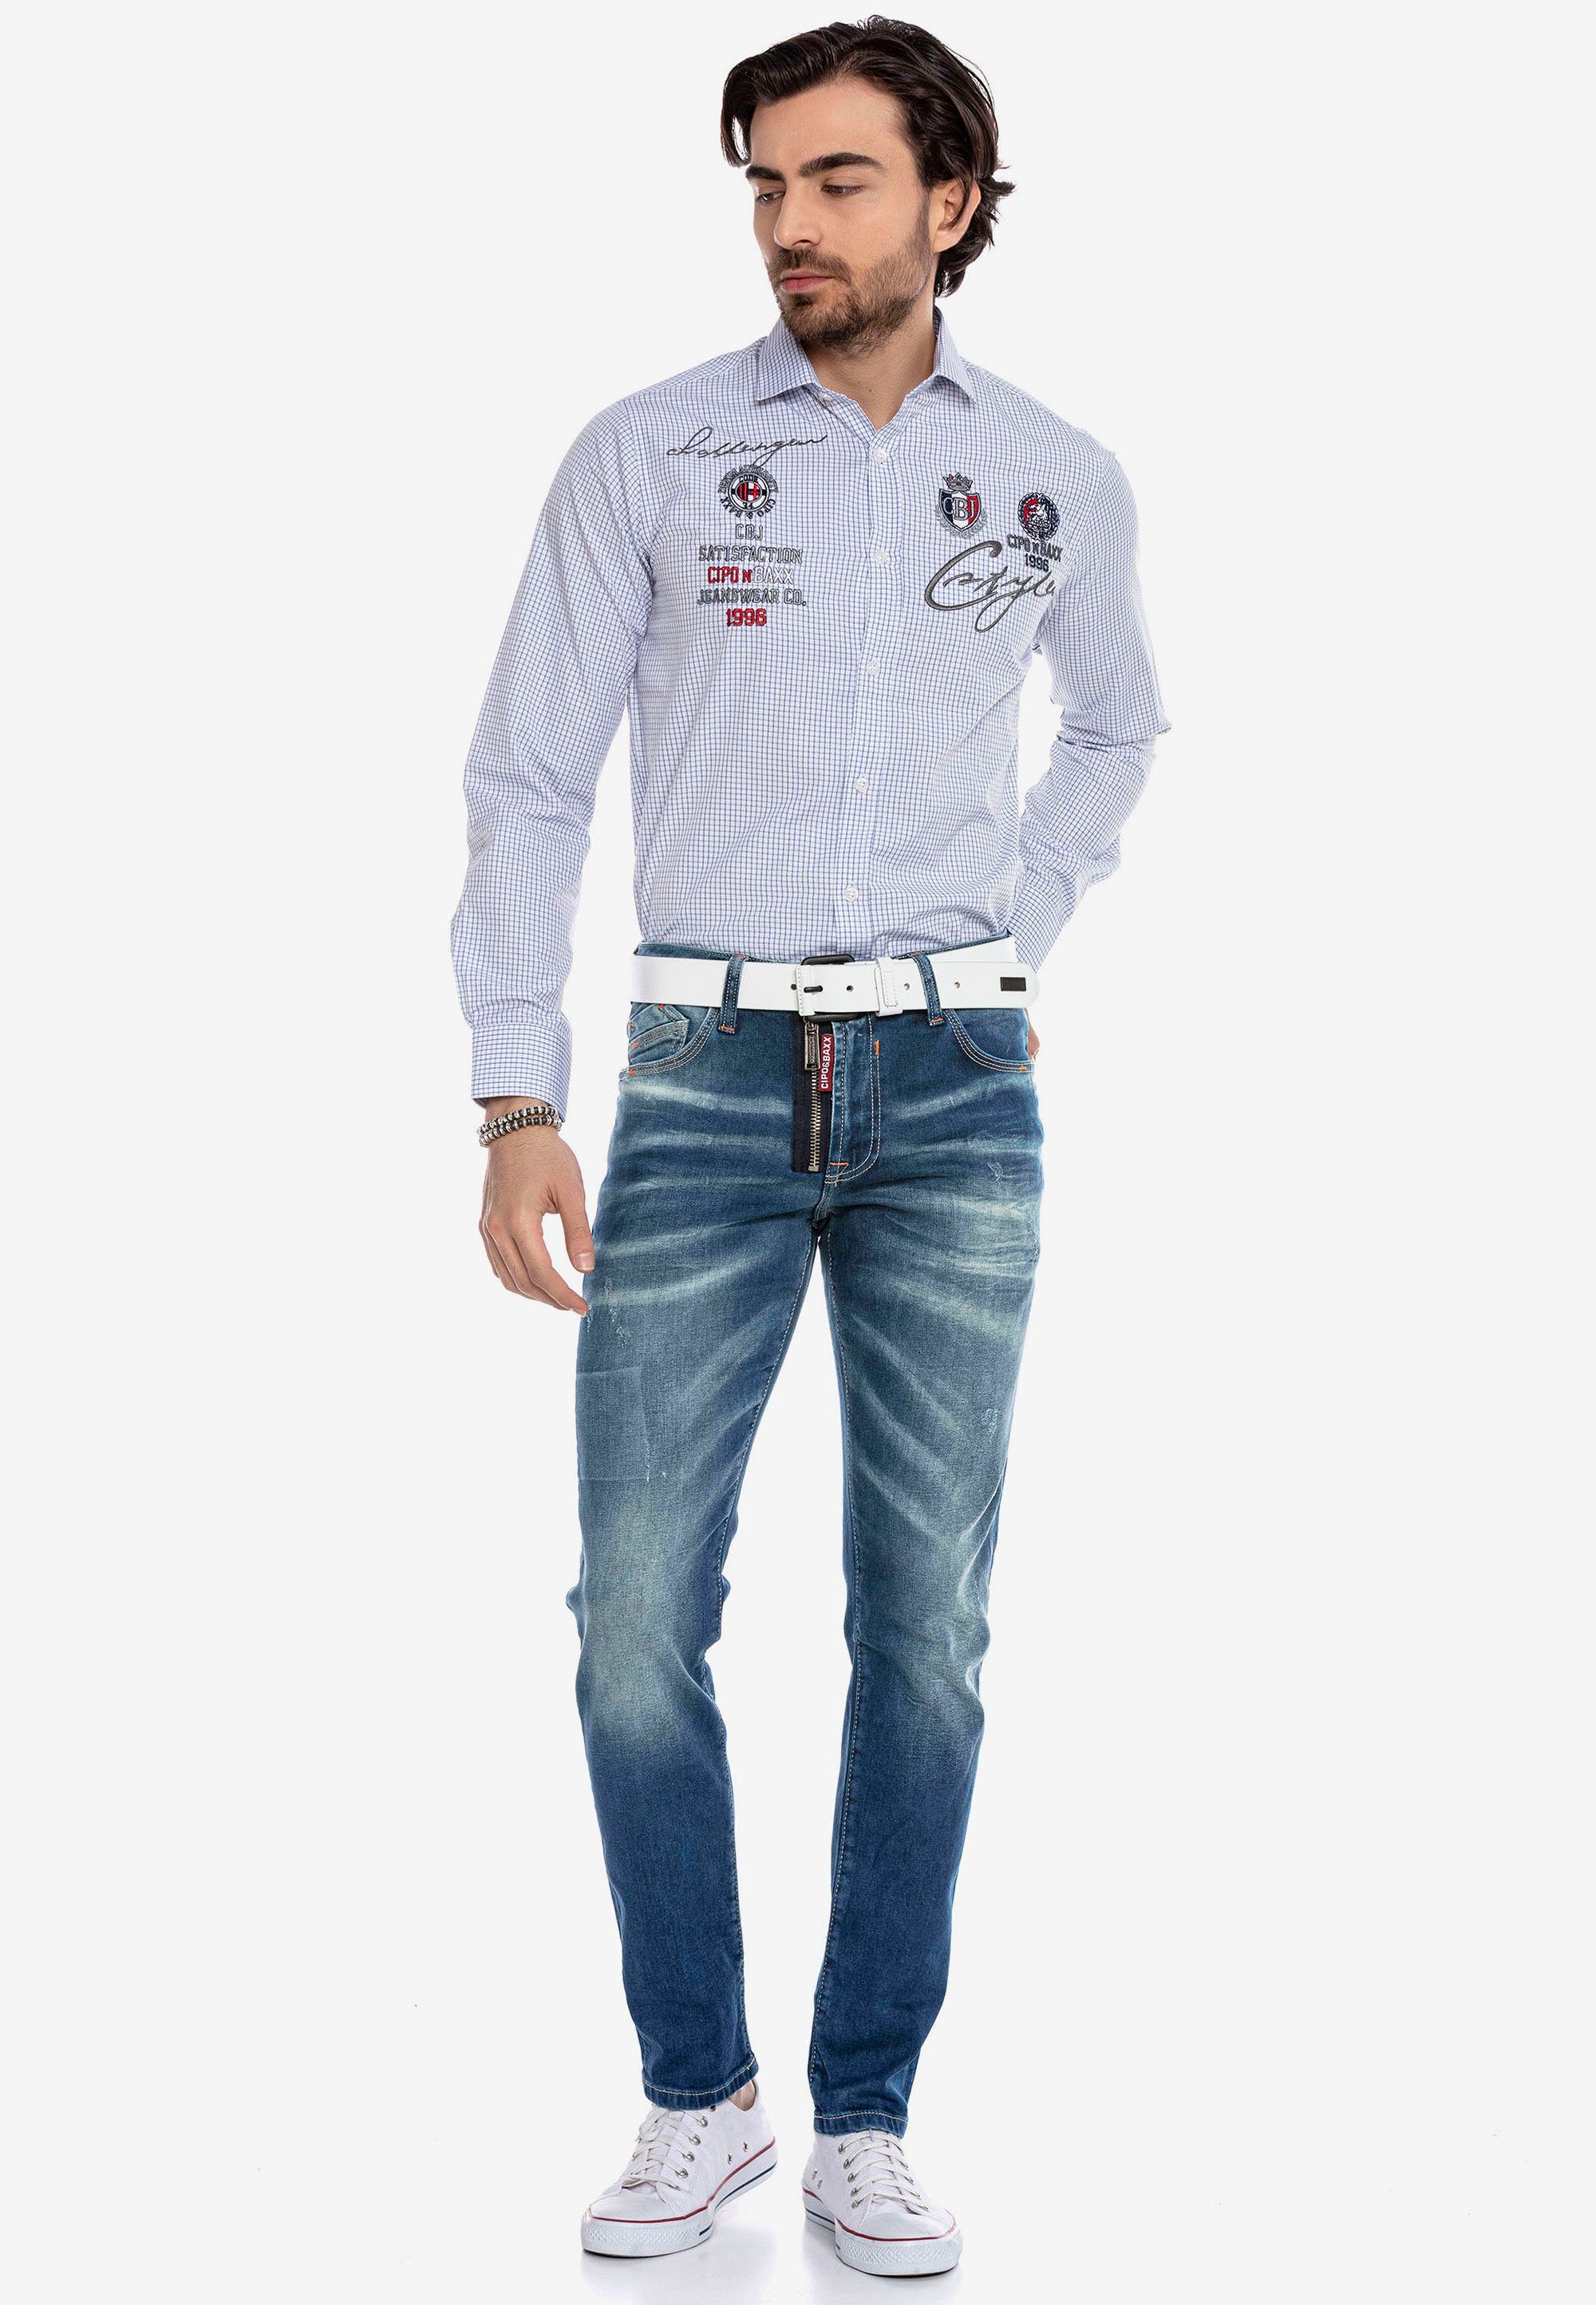 Bequeme Jeans Used-Elementen Baxx Cipo trendigen mit &